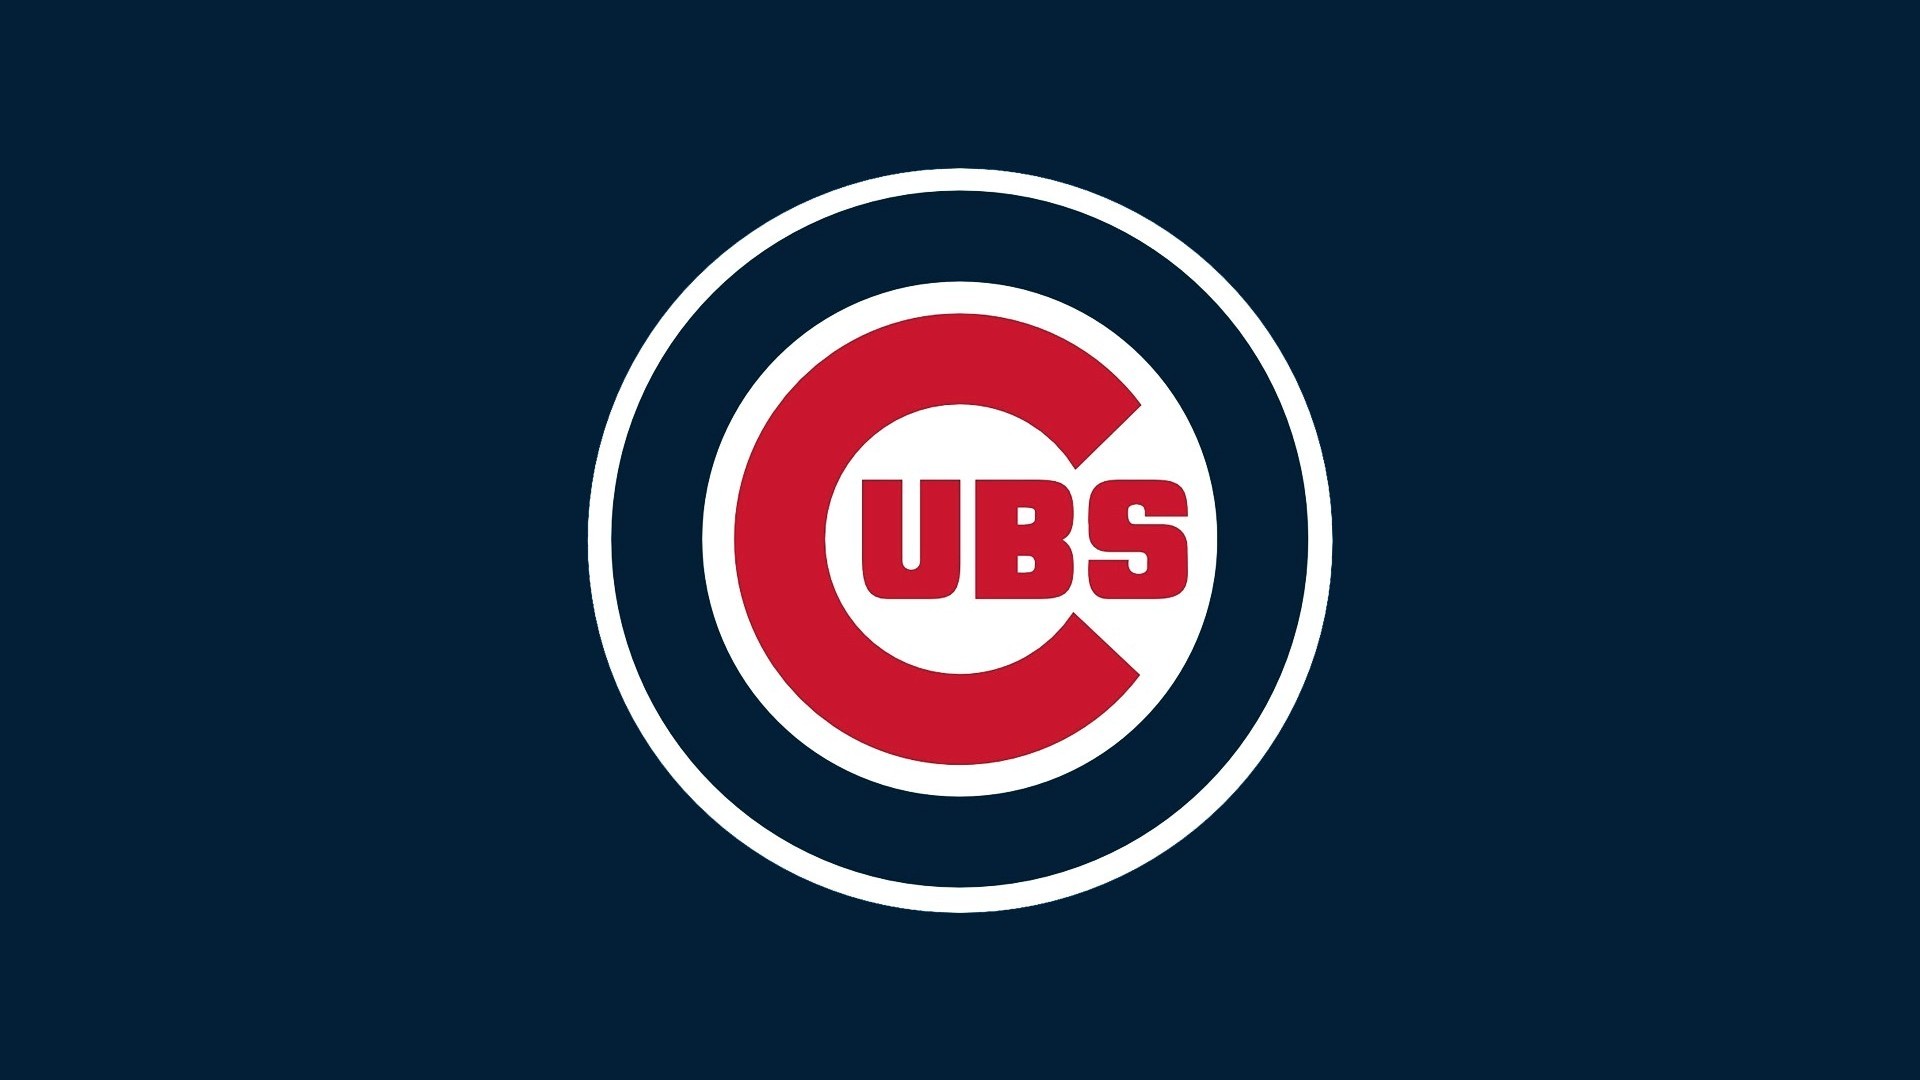 1920x1080 Chicago Cubs Wallpaper